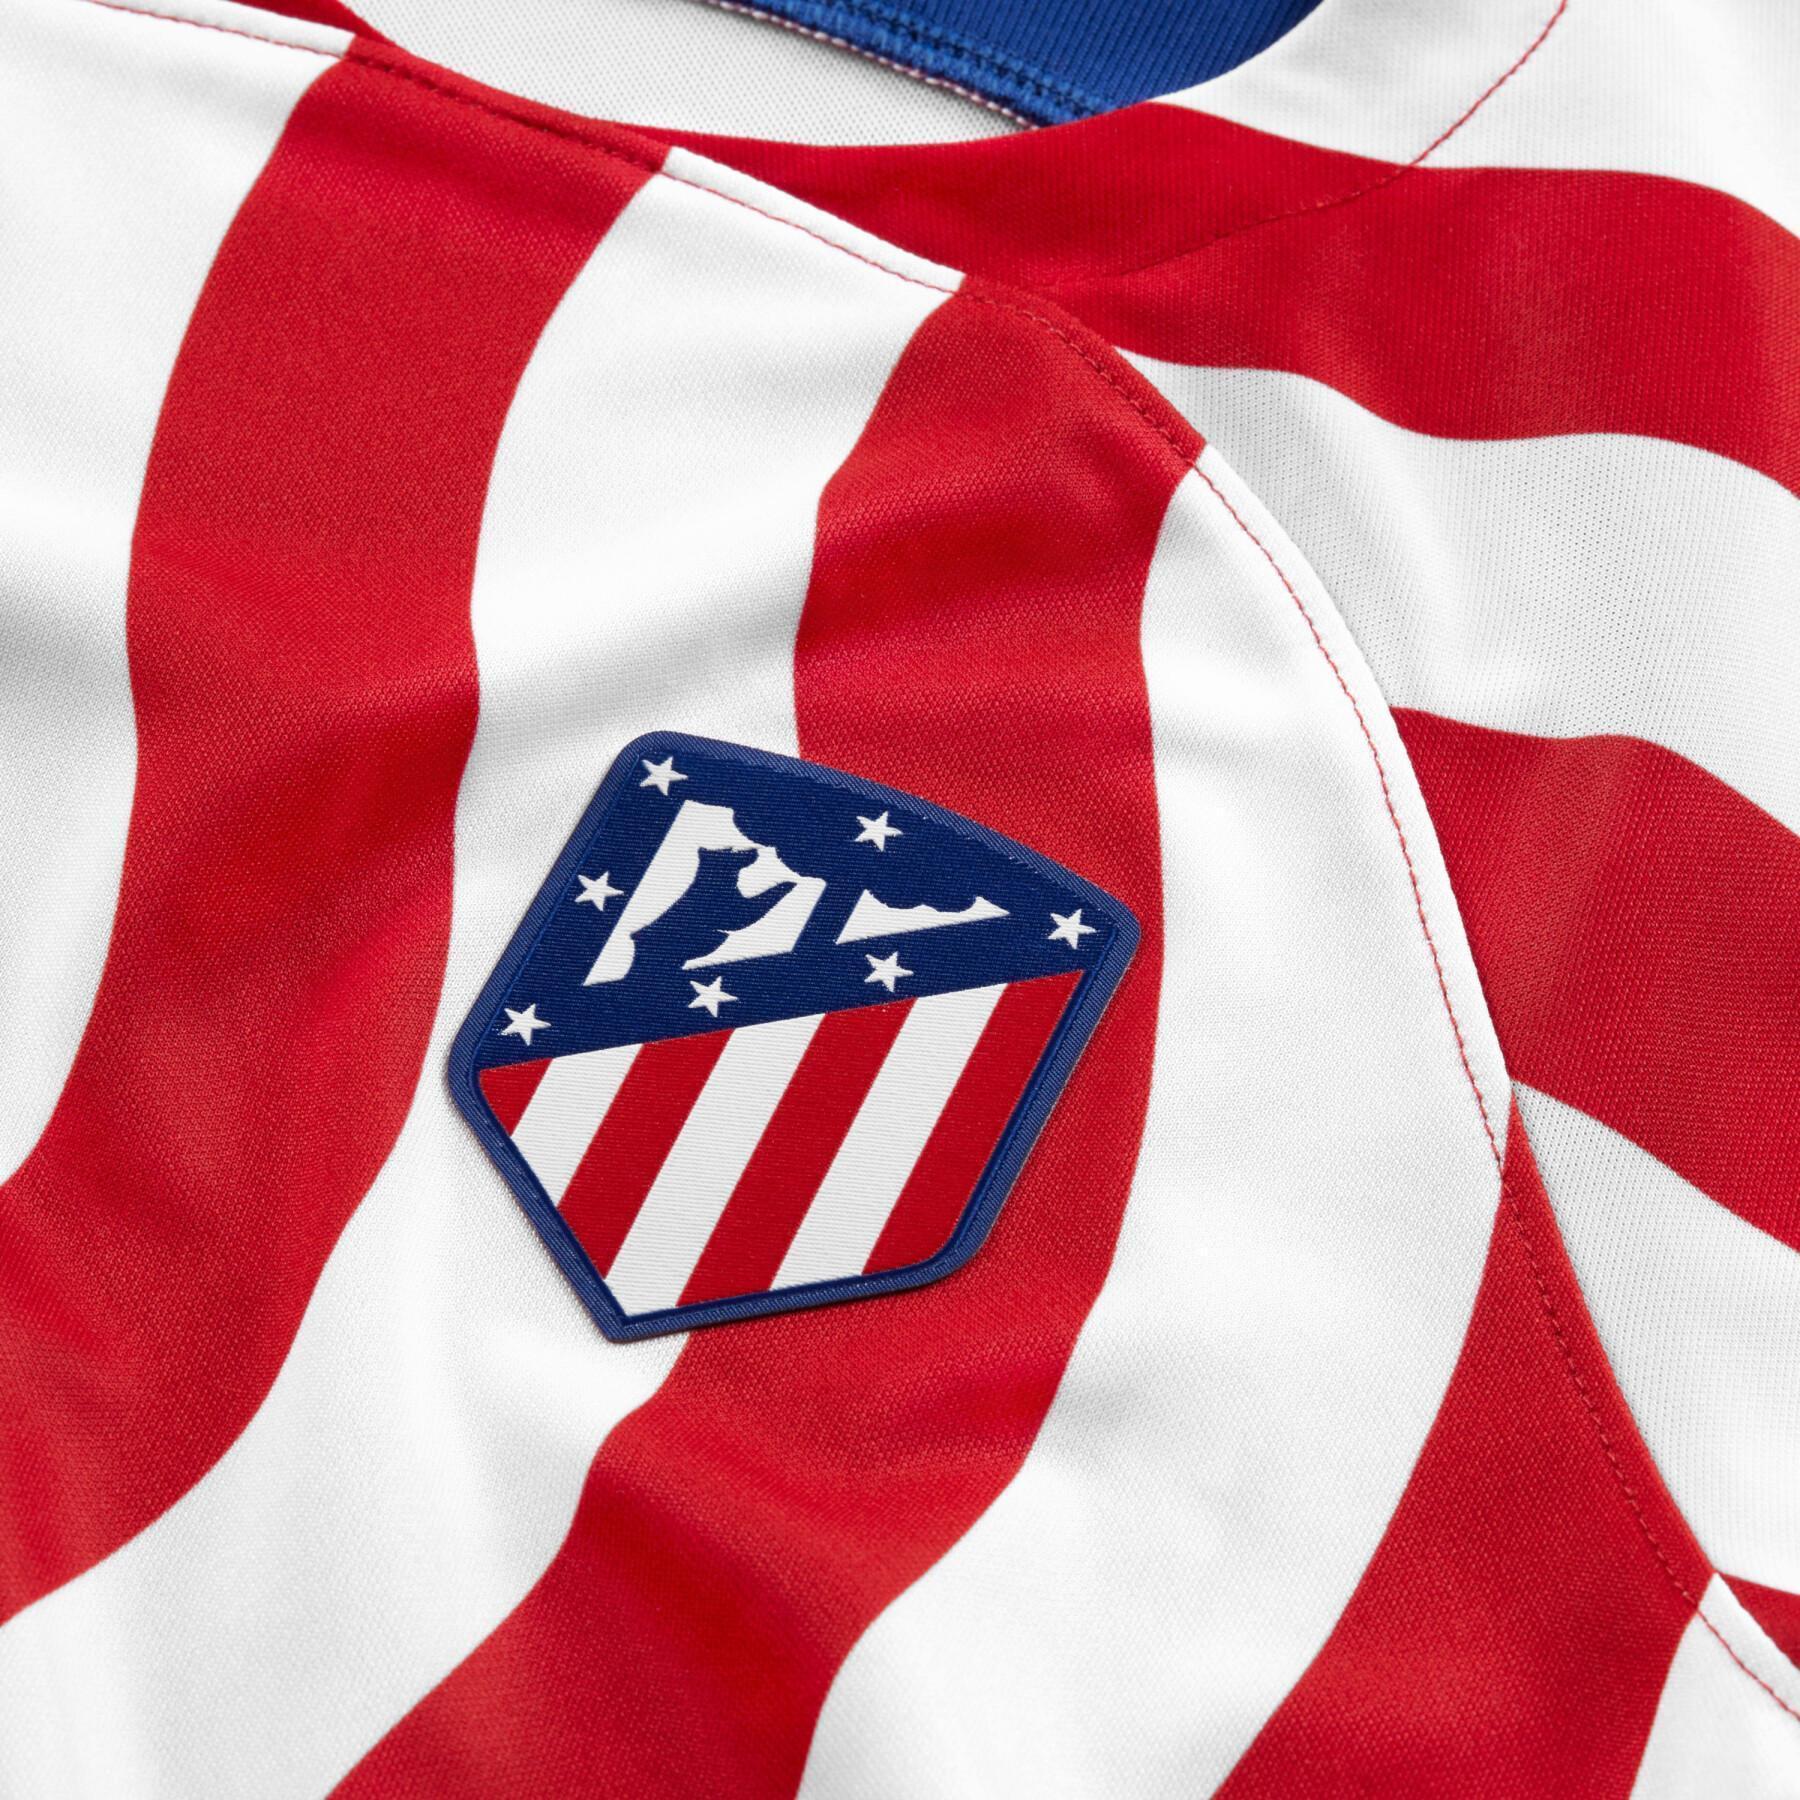 Women's home jersey Atlético Madrid 2022/23